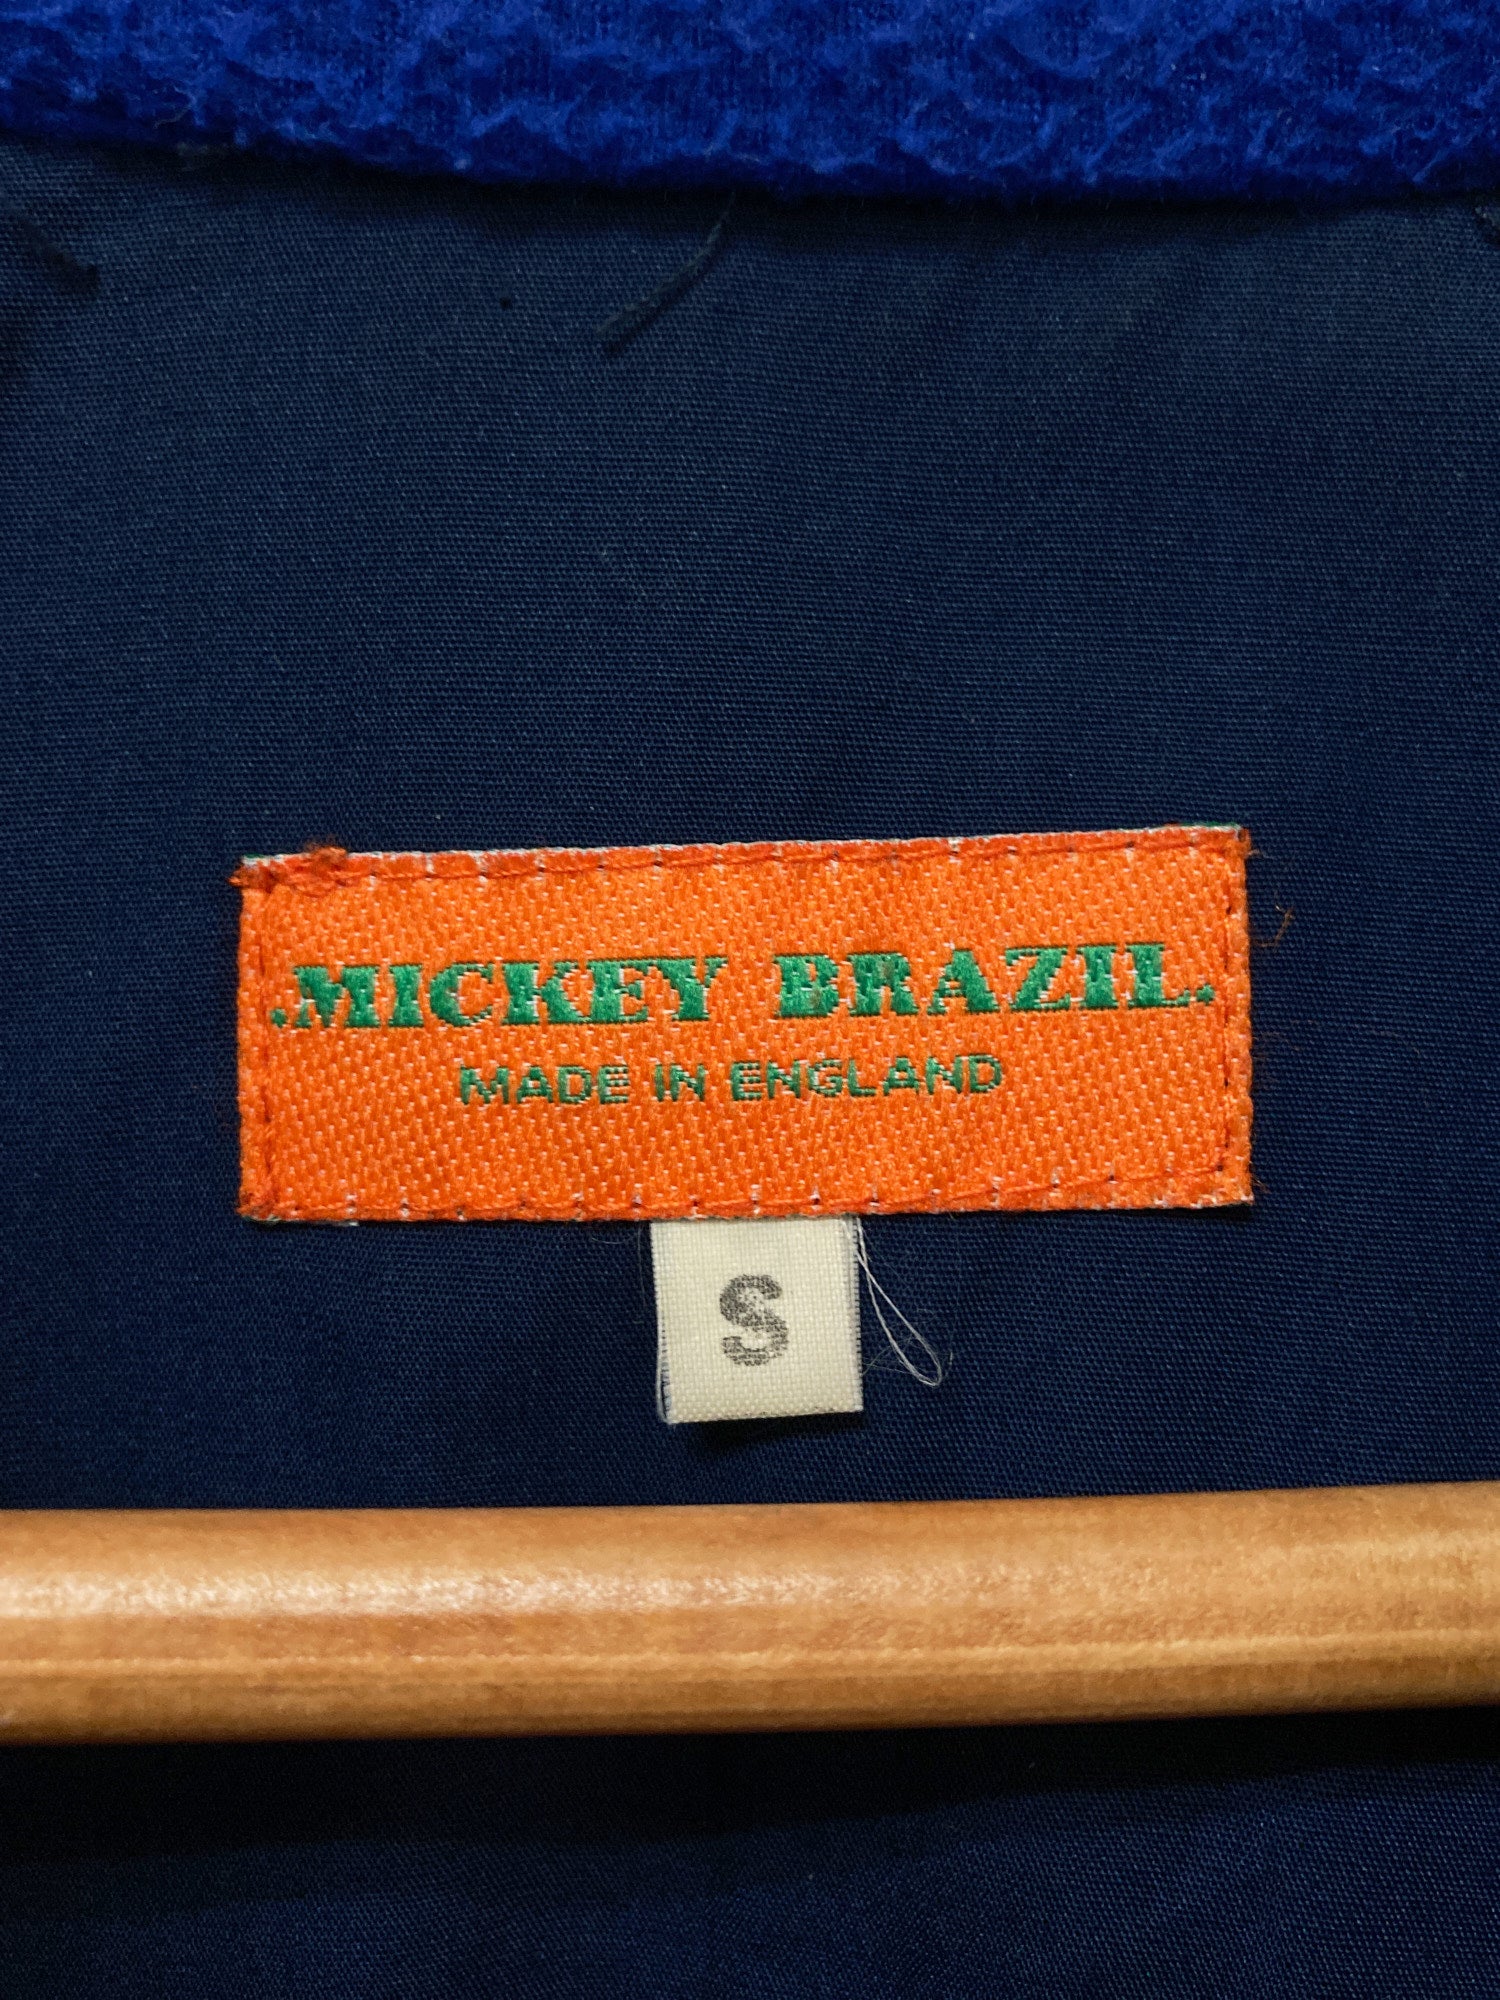 Mickey Brazil purple navy canvas three pocket high neck jacket - S M